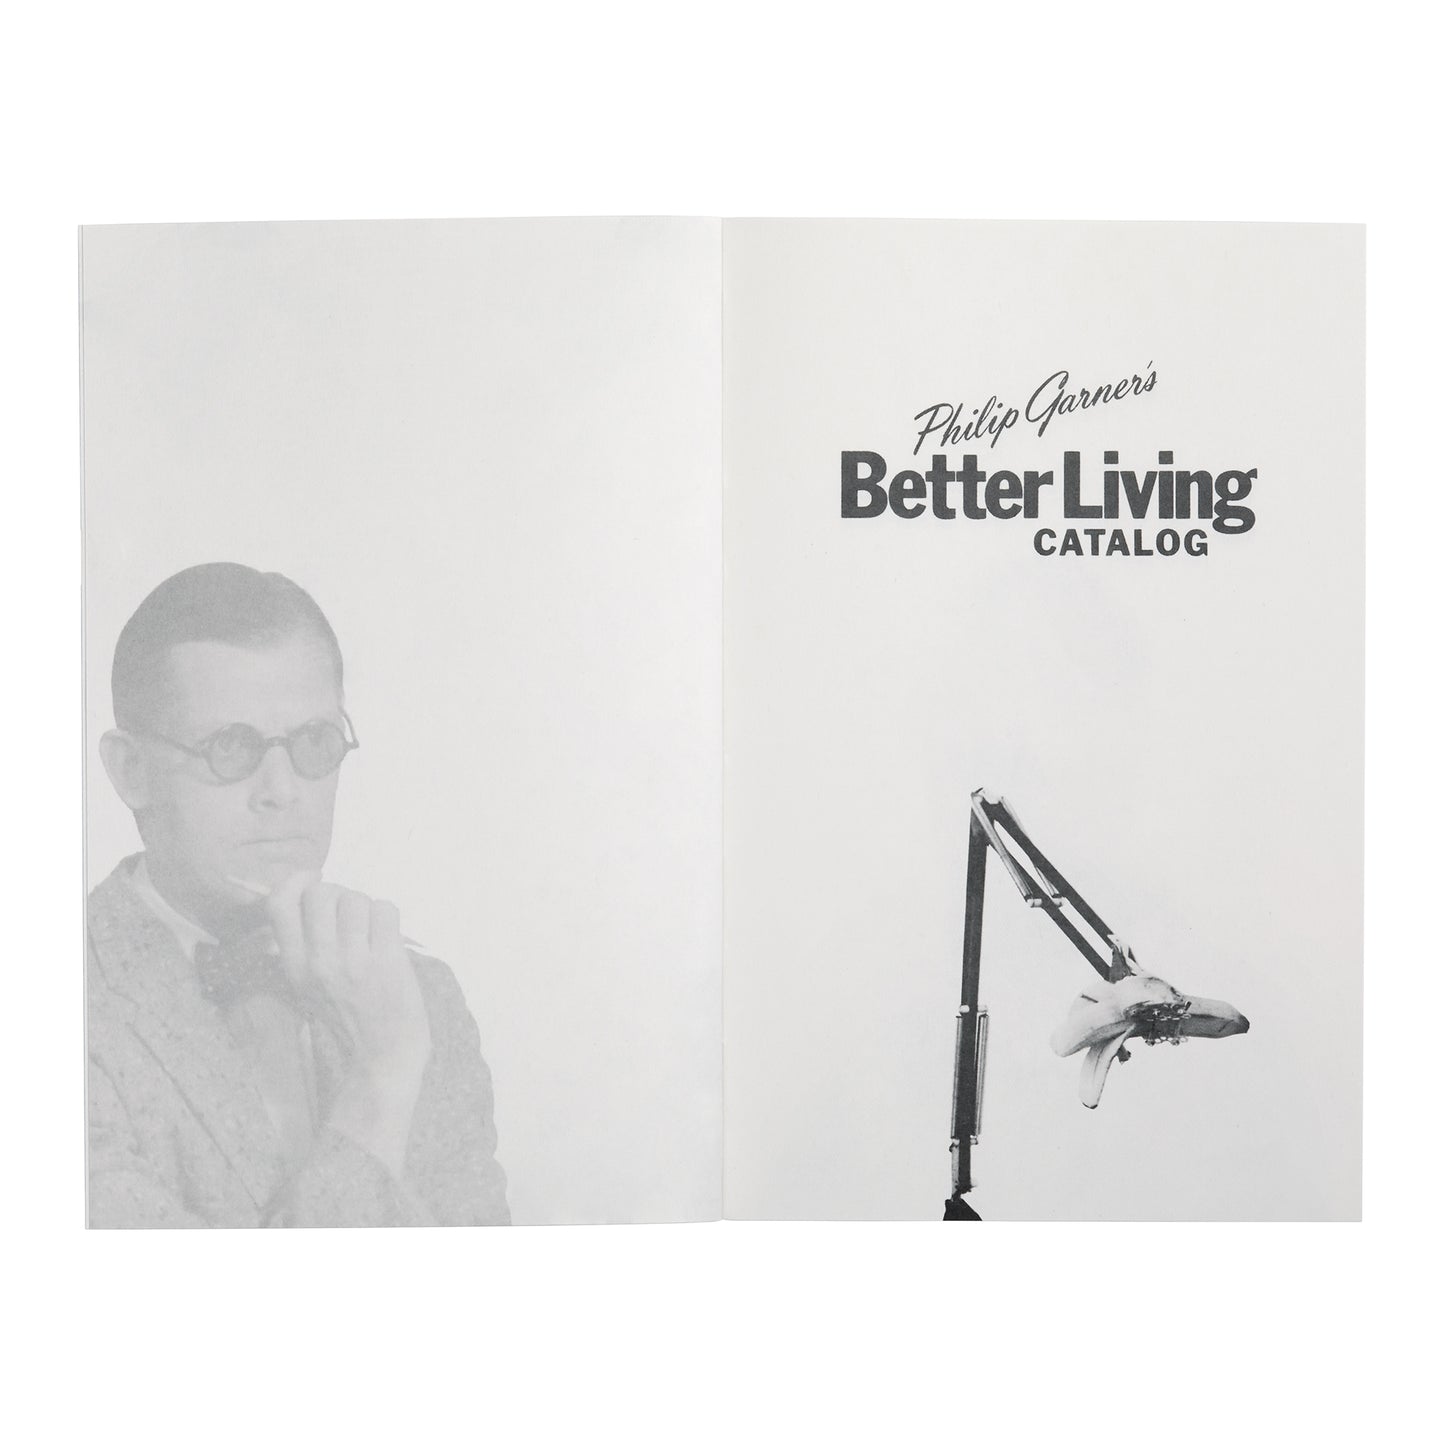 Pippa Garner - Better Living Catalog